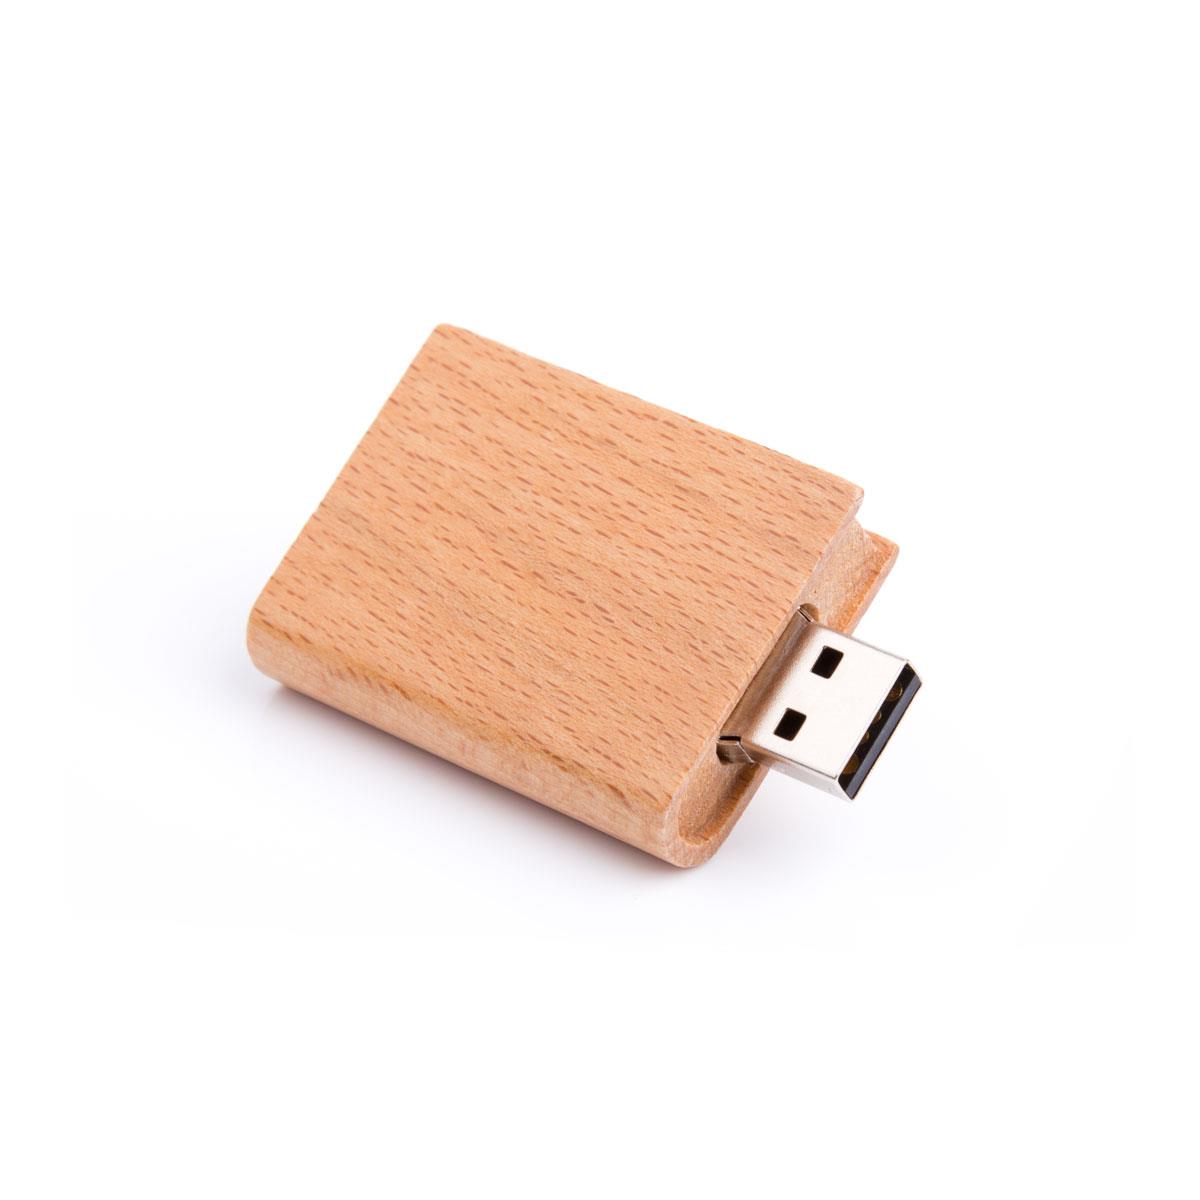 USB Stick Wood Book 512 MB